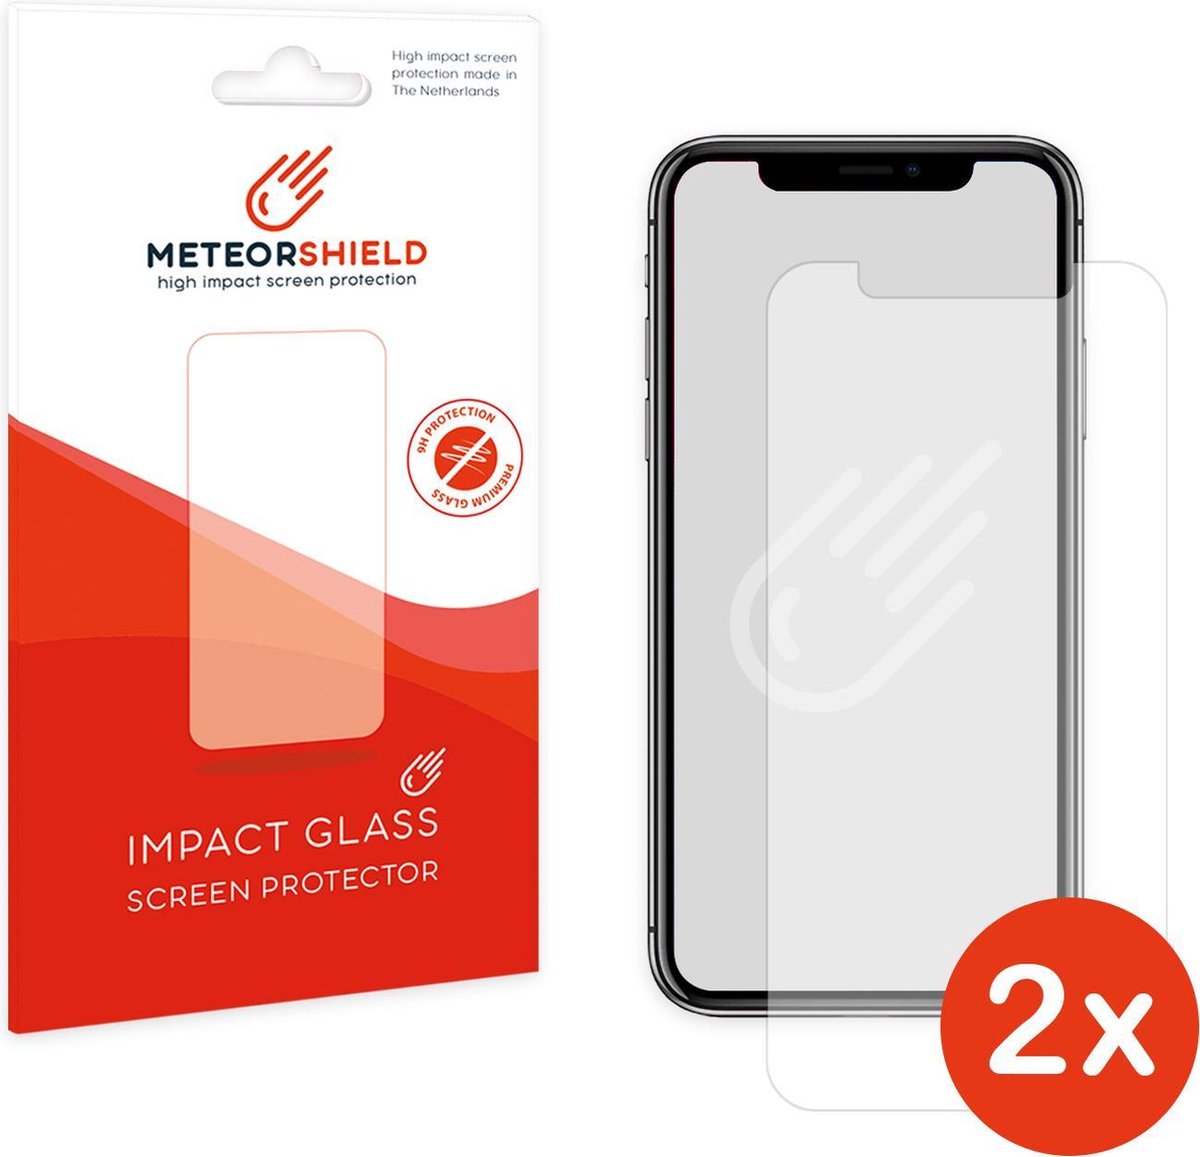 2 stuks: Meteorshield iPhone X screenprotector - Ultra clear impact glass